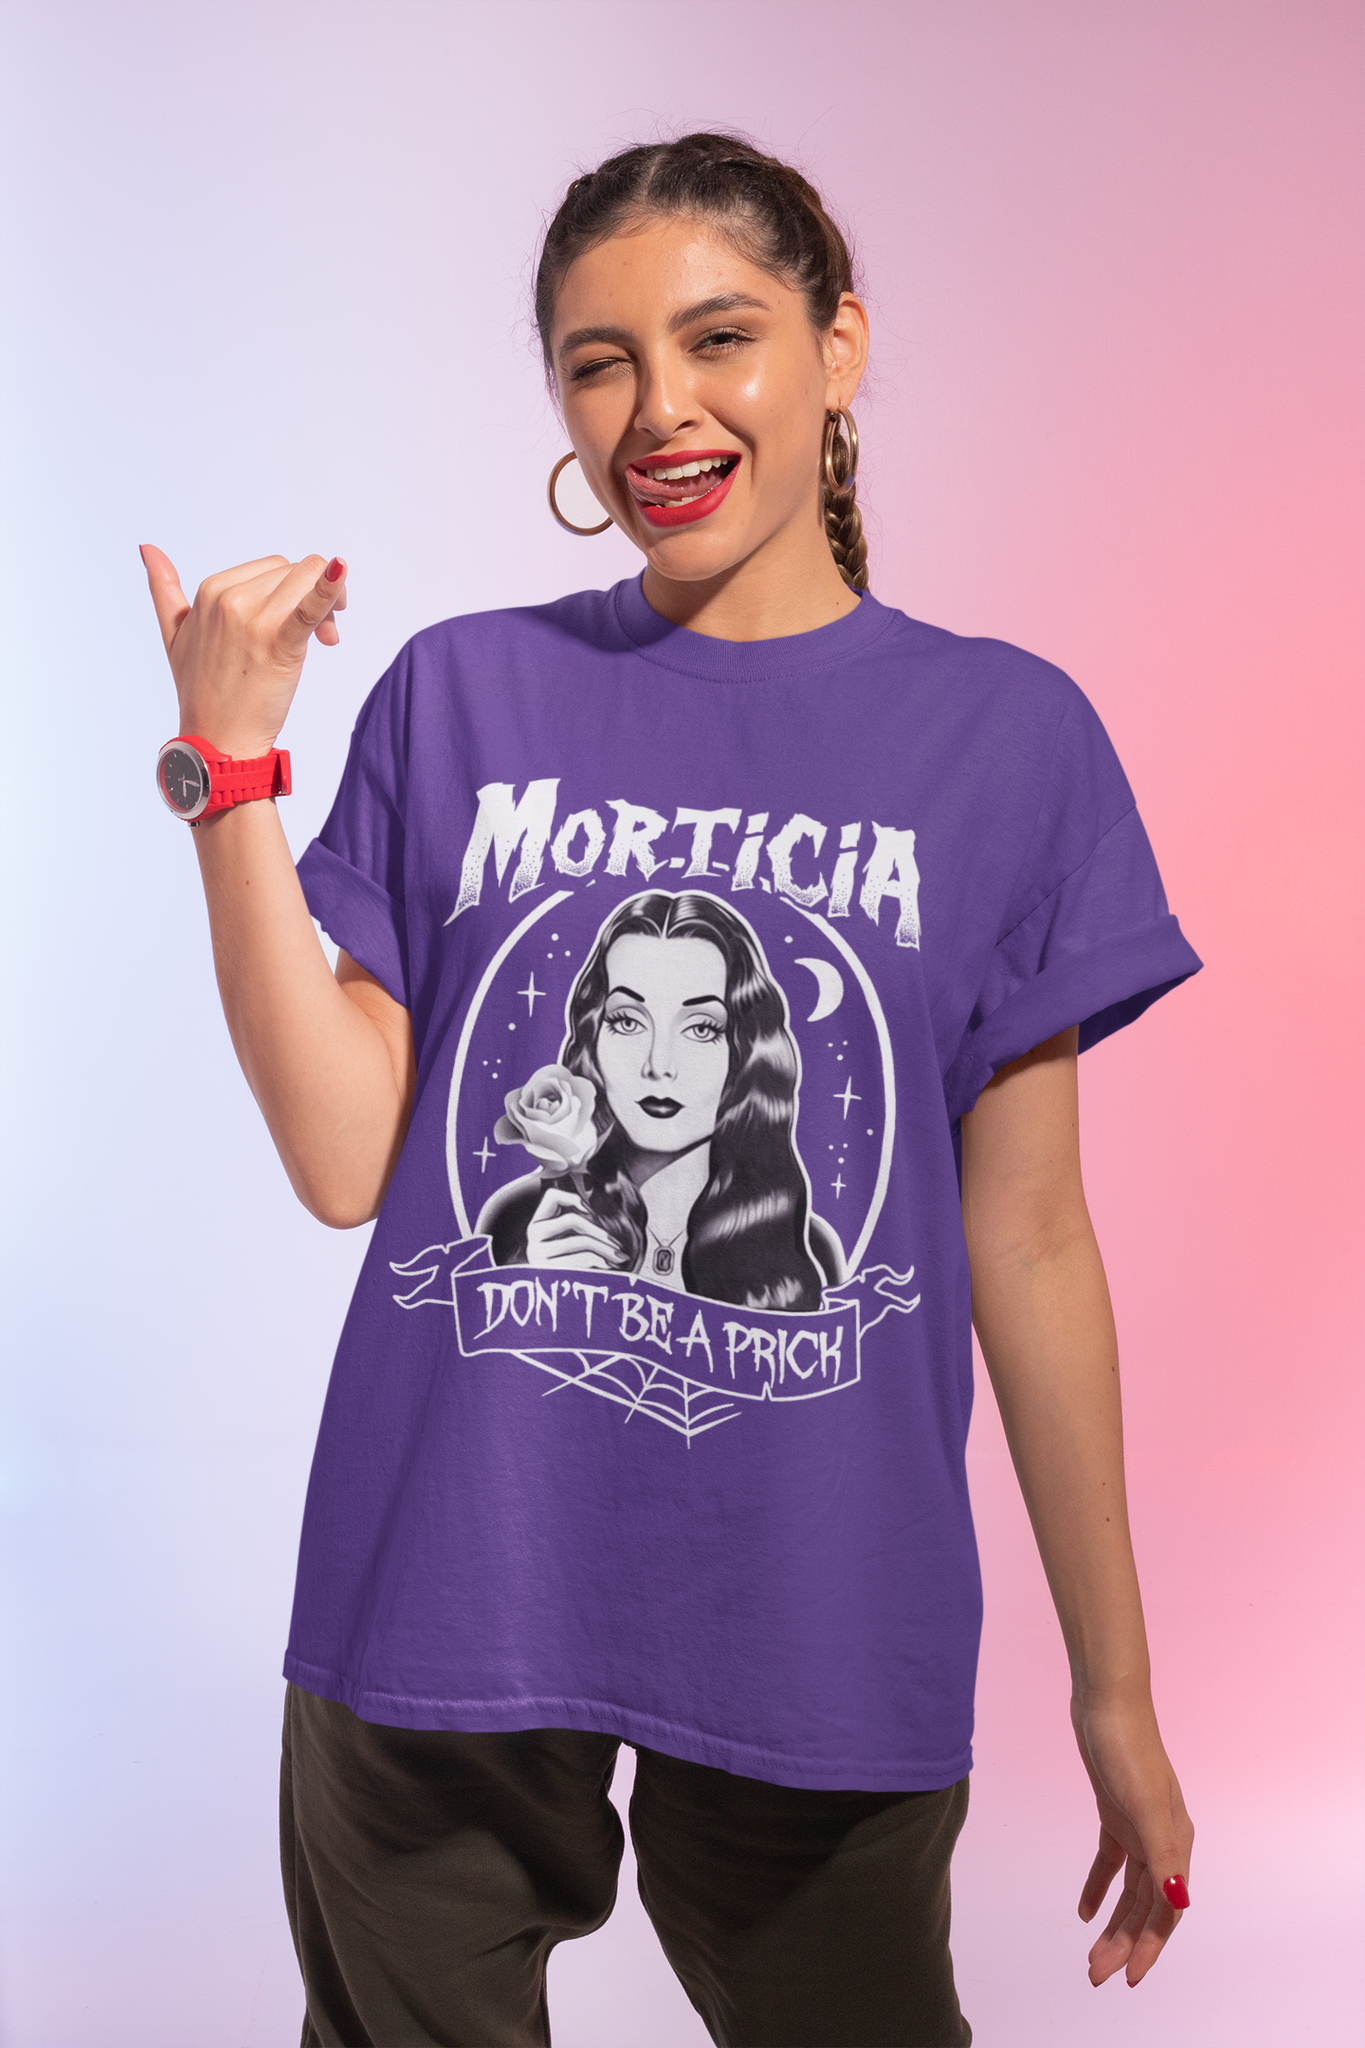 Addams Family T Shirt, Morticia Addams T Shirt, Morticia Dont Be A Prick Tshirt, Halloween Gift